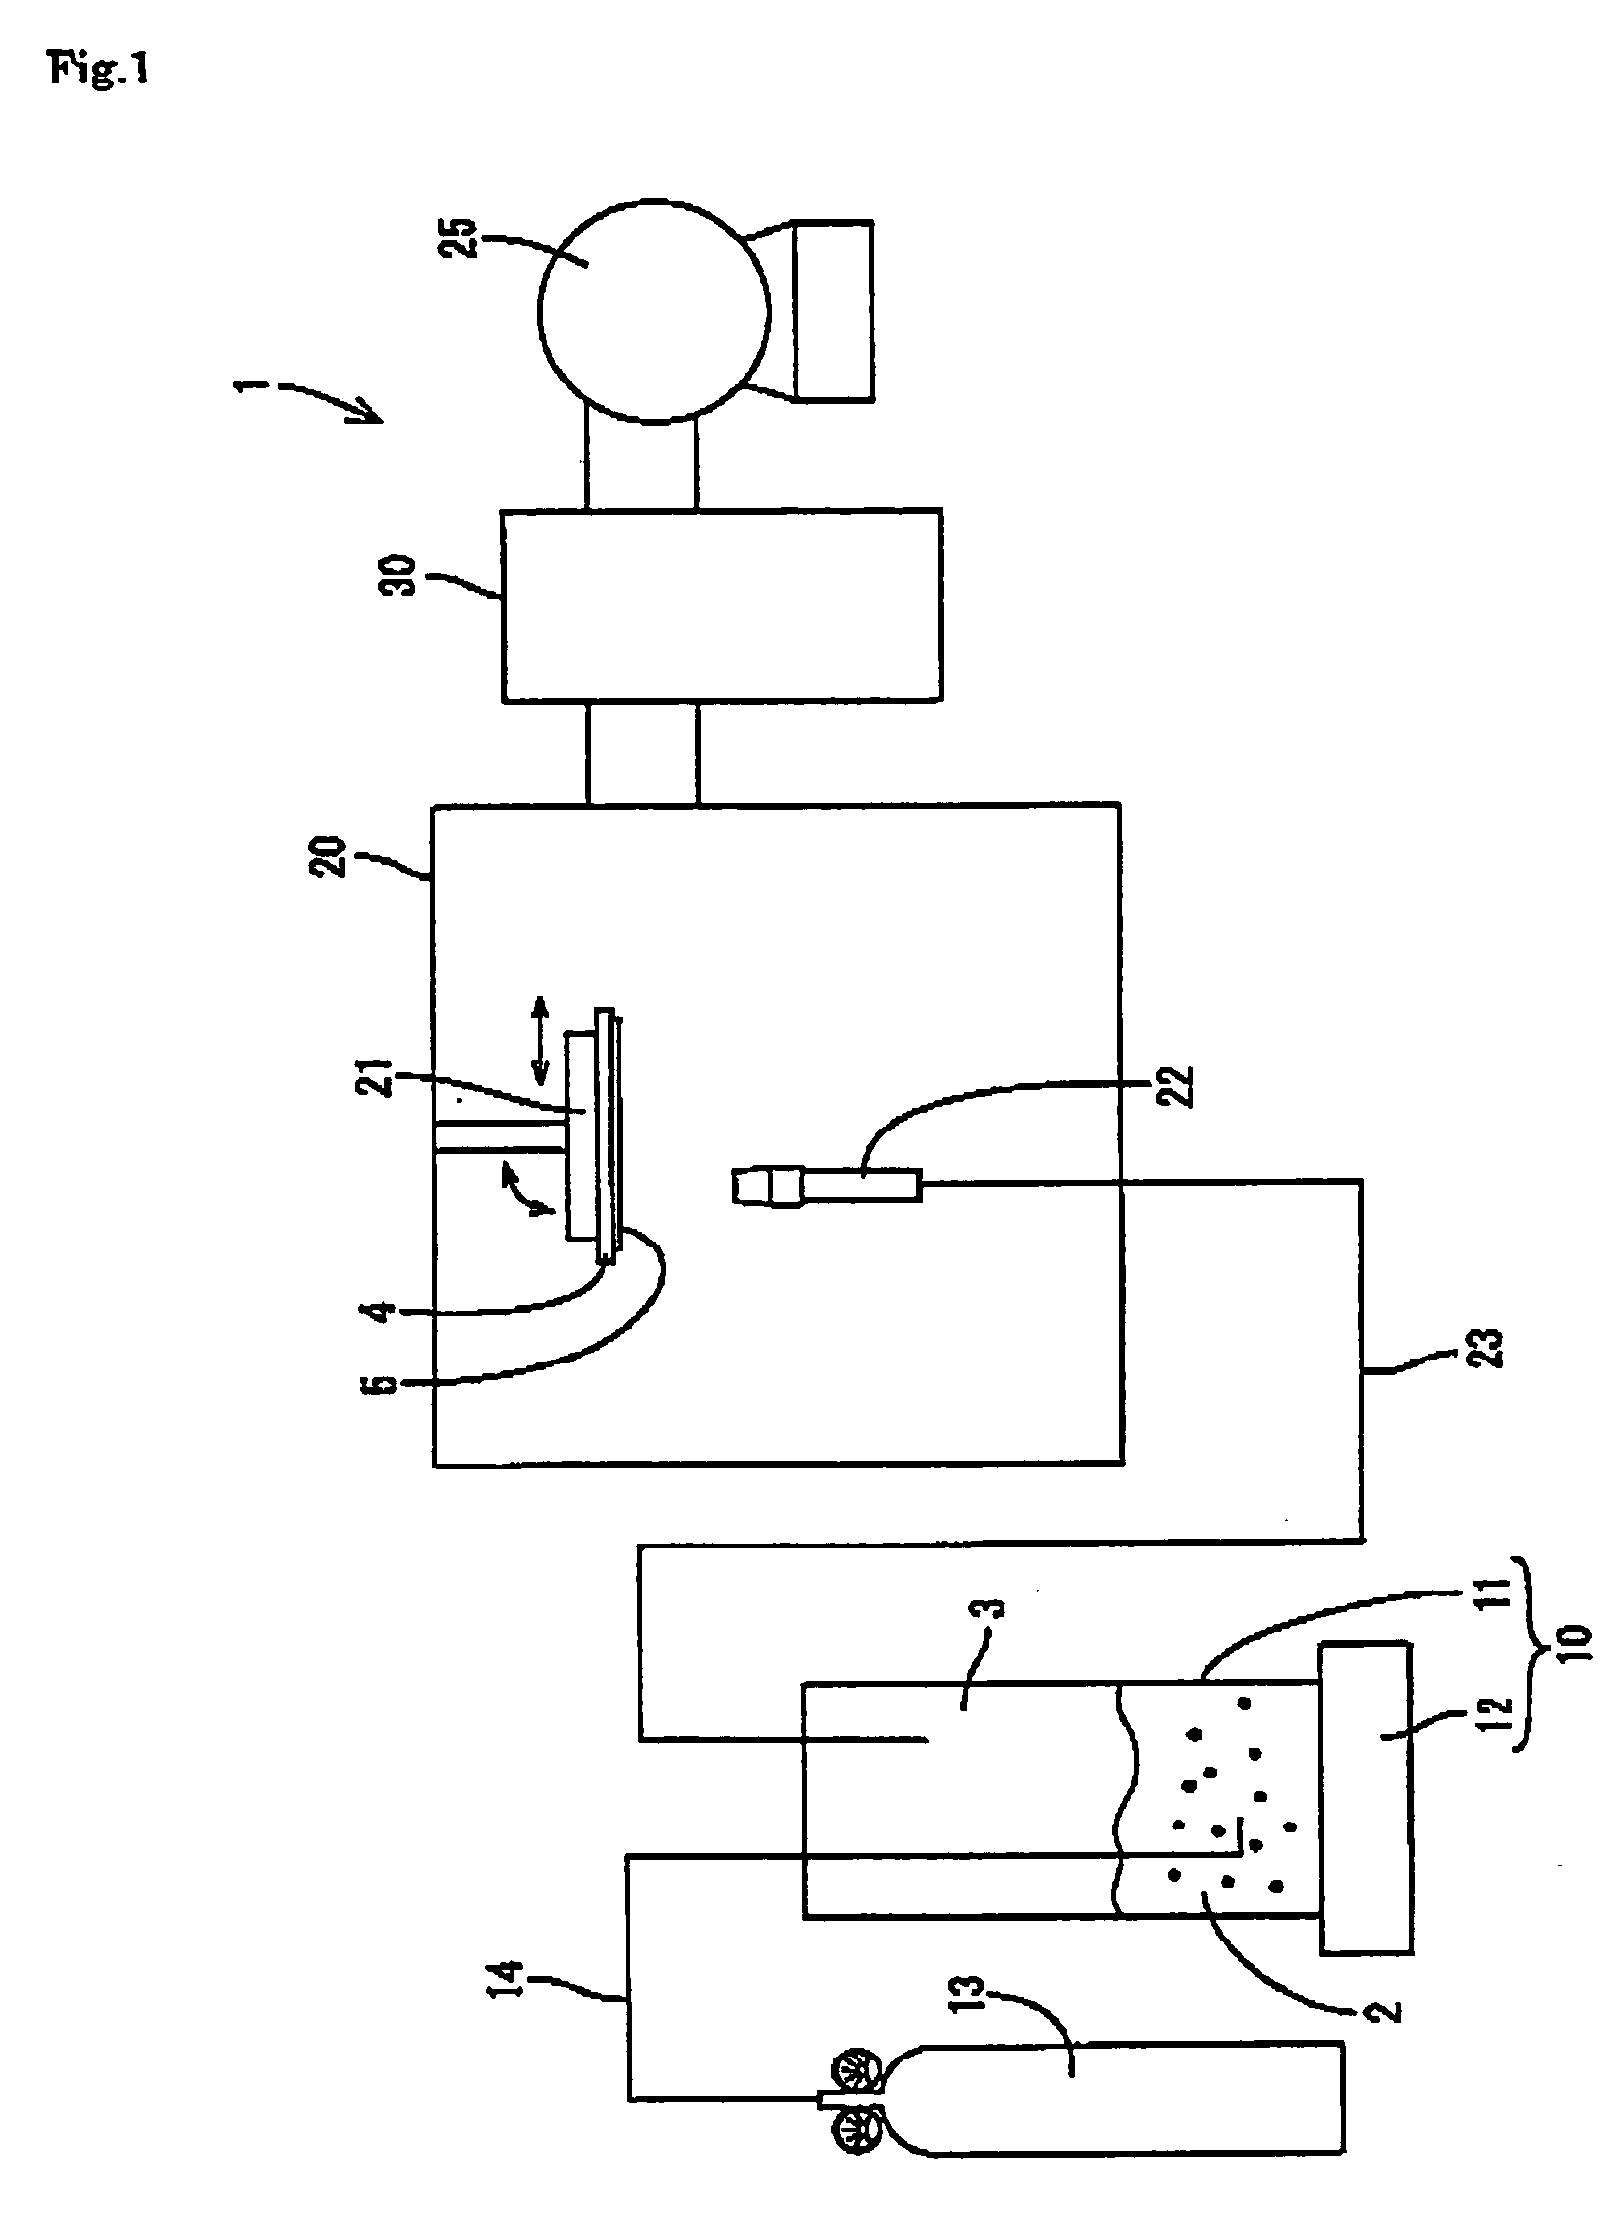 Method for manufacturing film or piezoelectric film